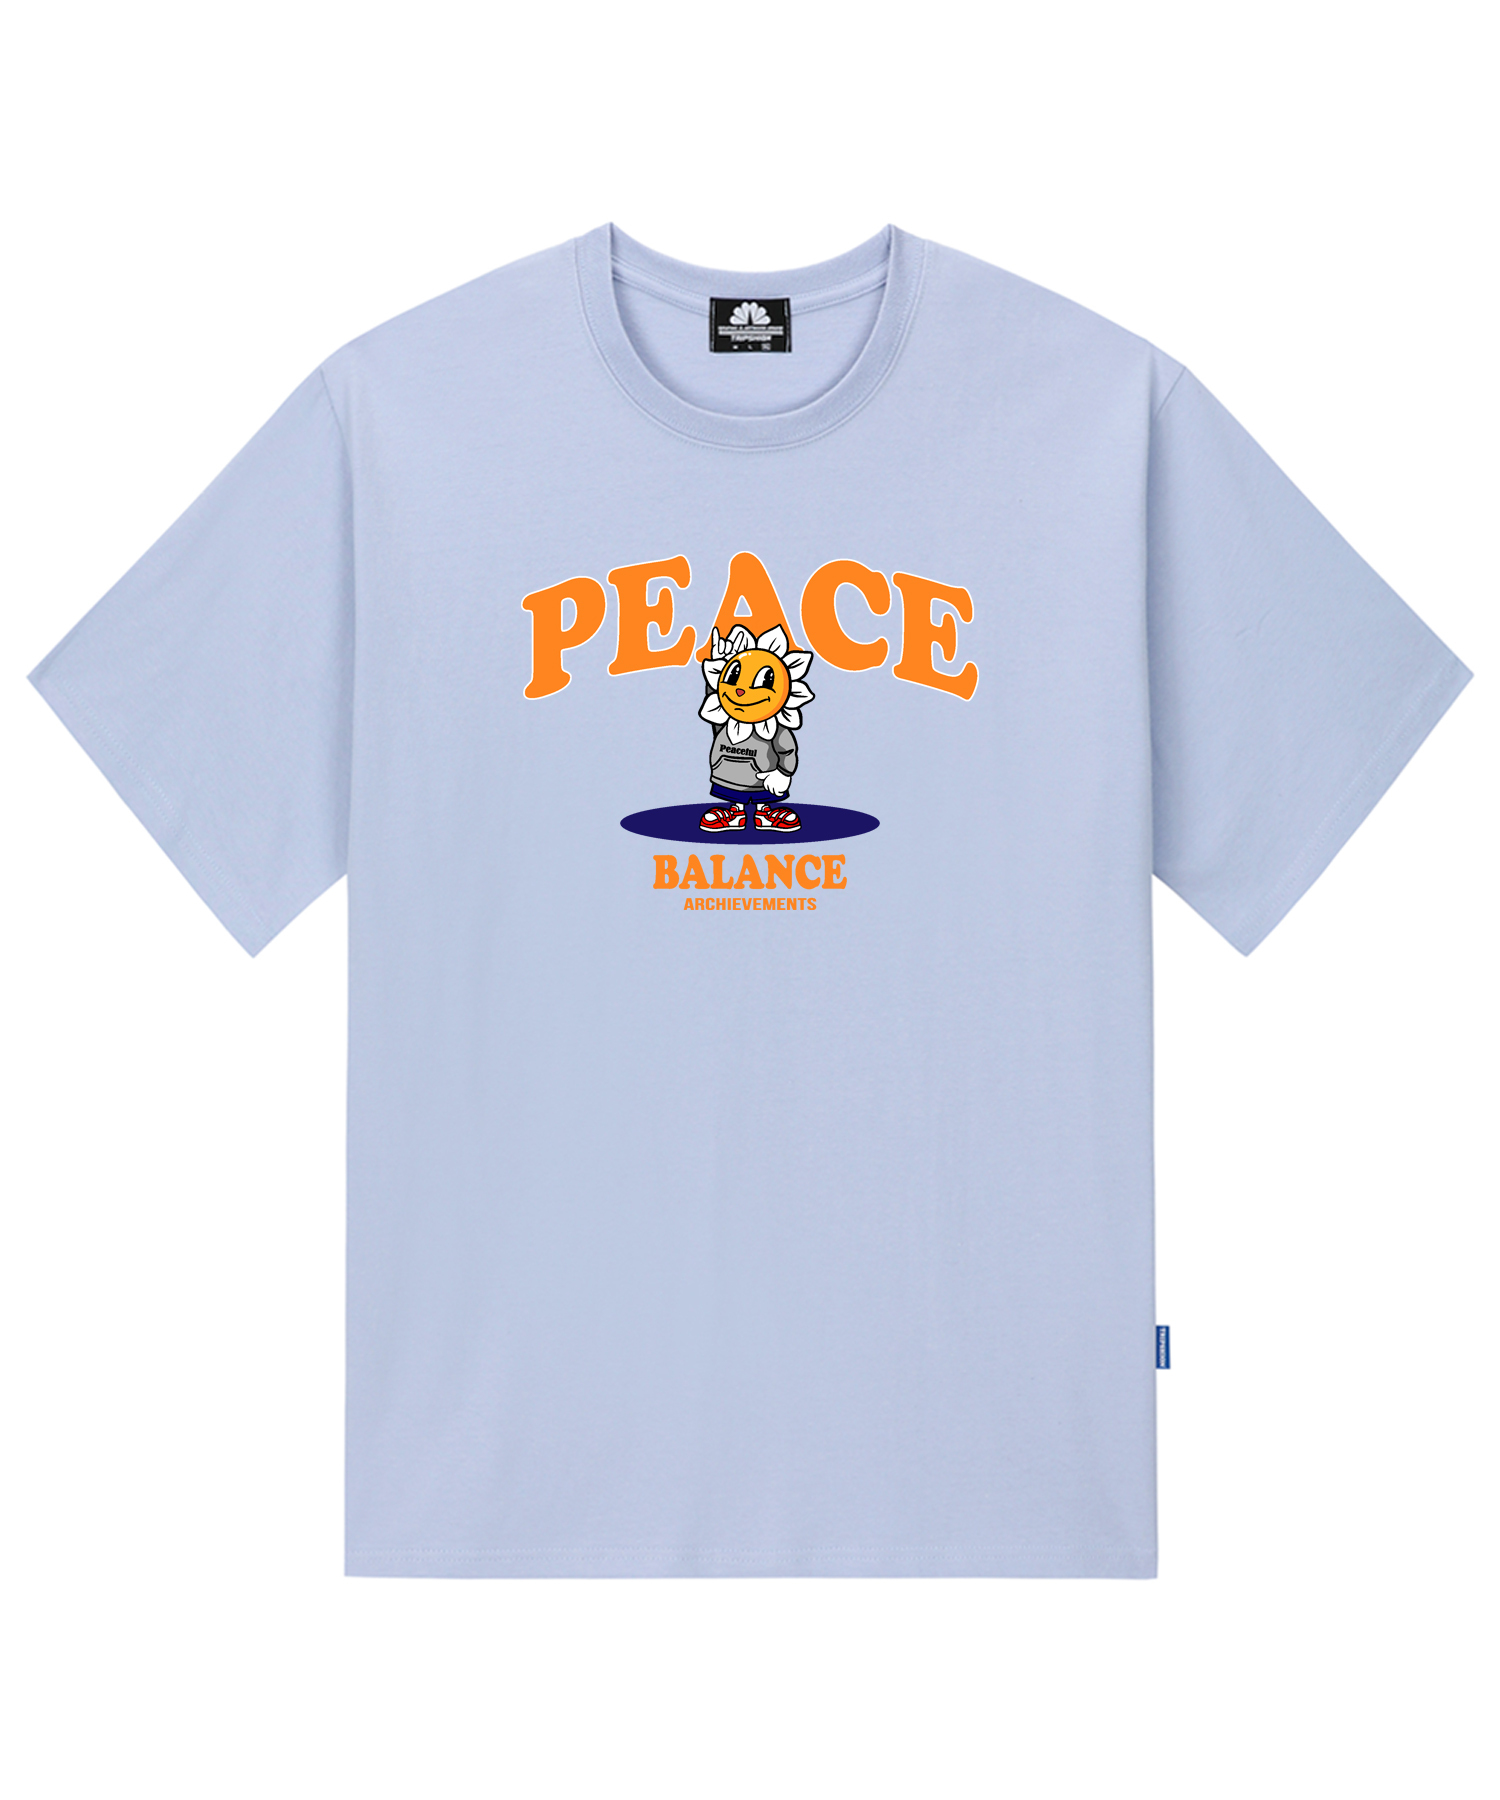 PEACE TIGER GRAPHIC T-SHIRTS - PURPLE